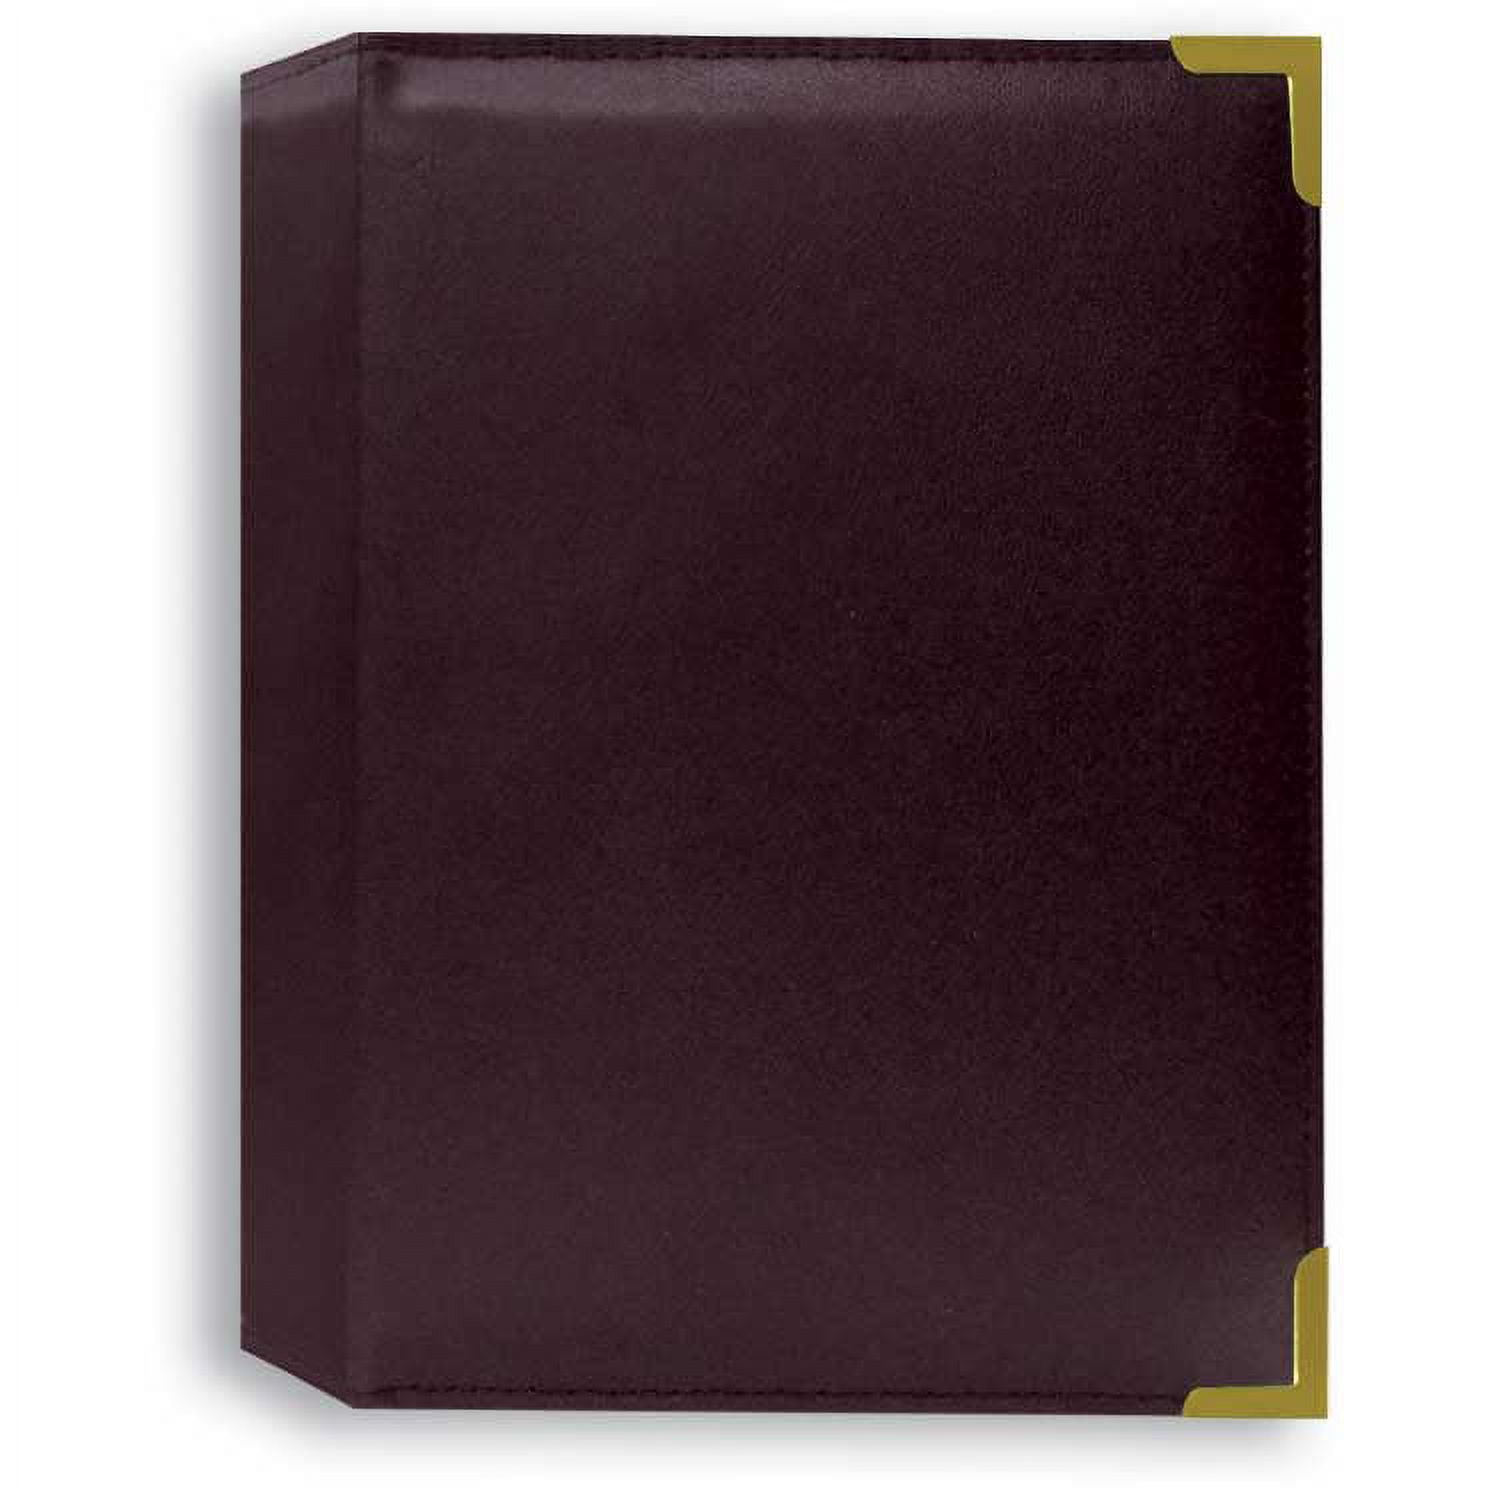 Dodd Camera - PIONEER 2PS160 Black Sewn Frame Album 4x6 2up 160 pocket